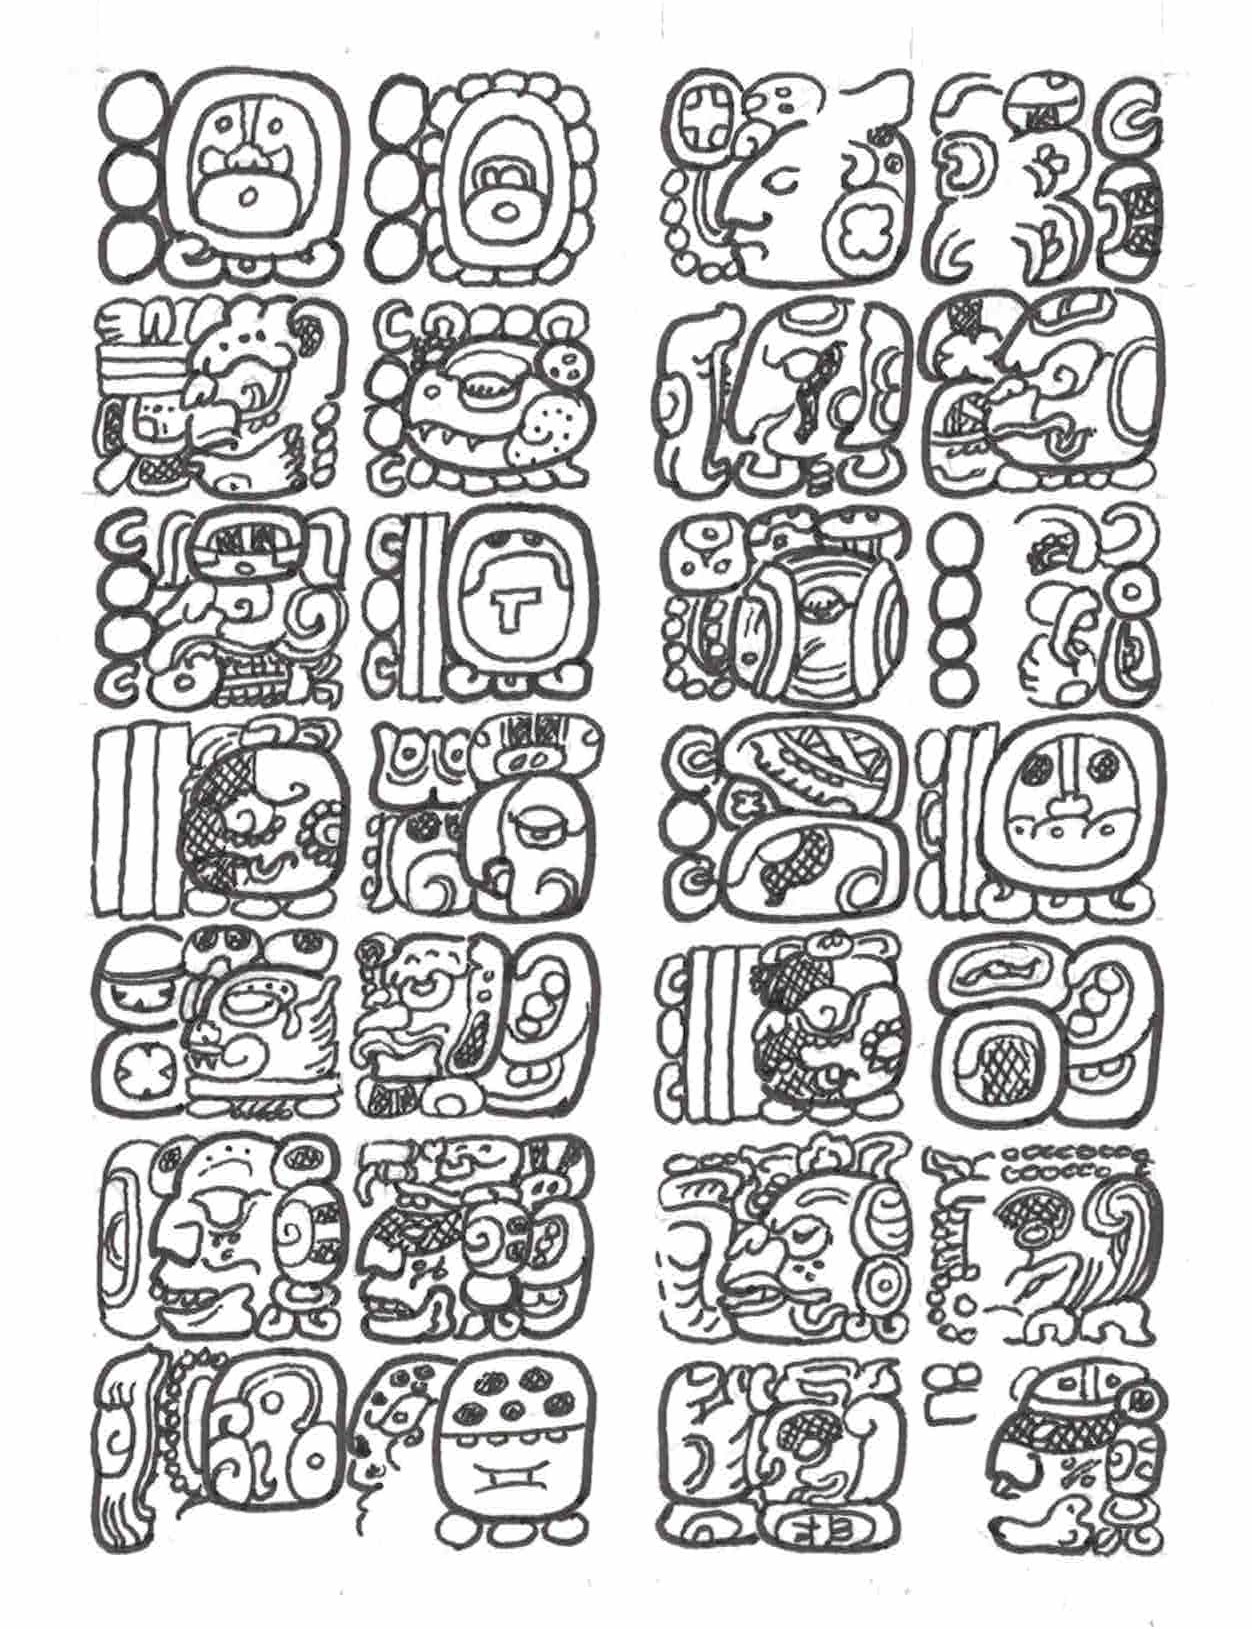 Mayan hieroglyphic text, arranged in four columns. 